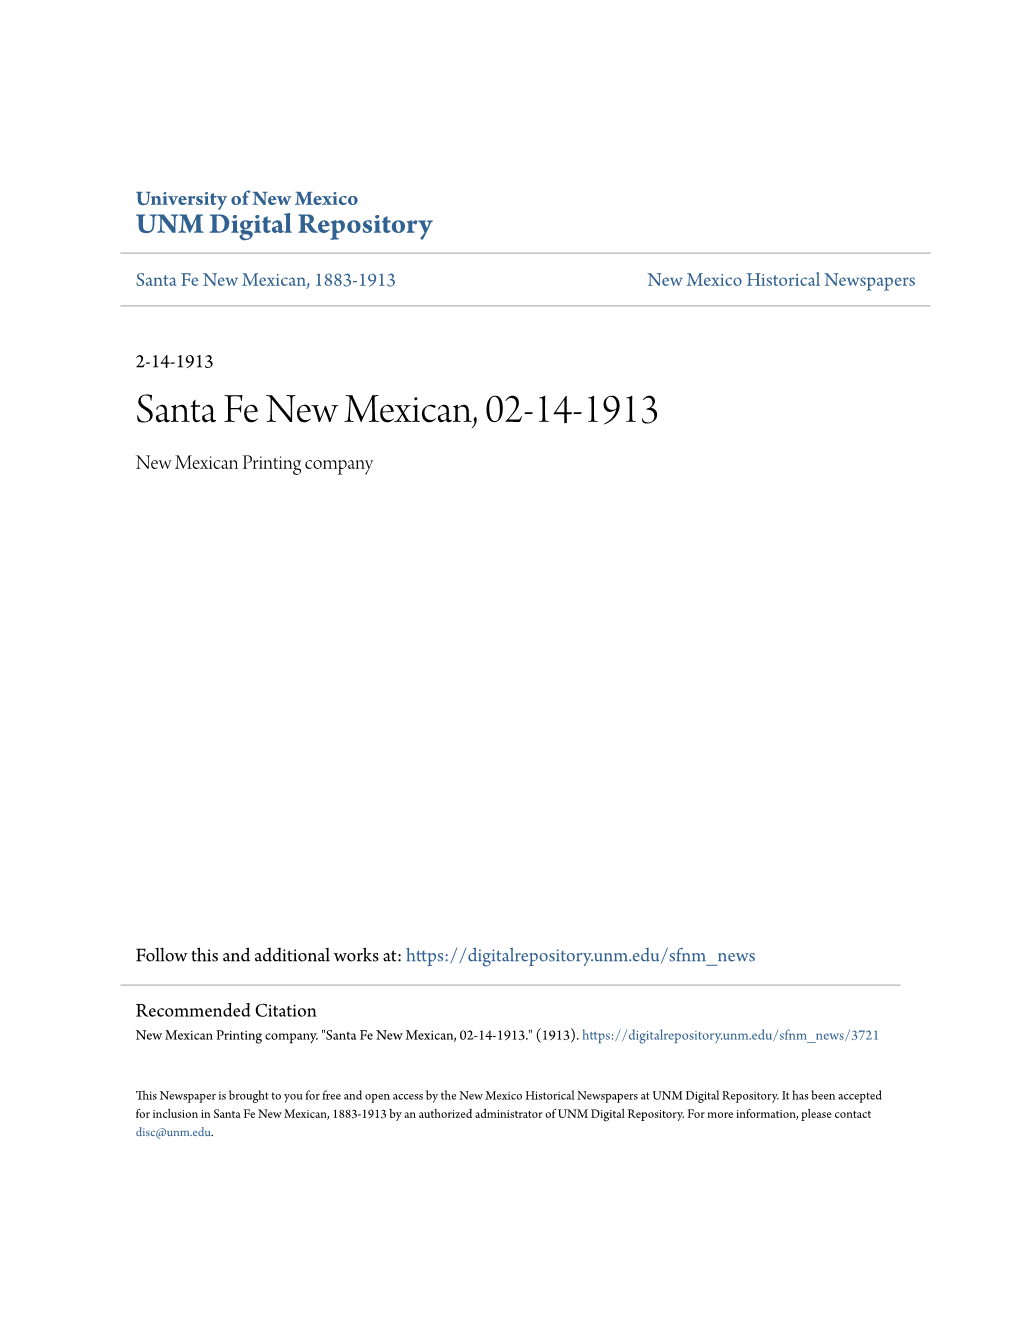 Santa Fe New Mexican, 02-14-1913 New Mexican Printing Company